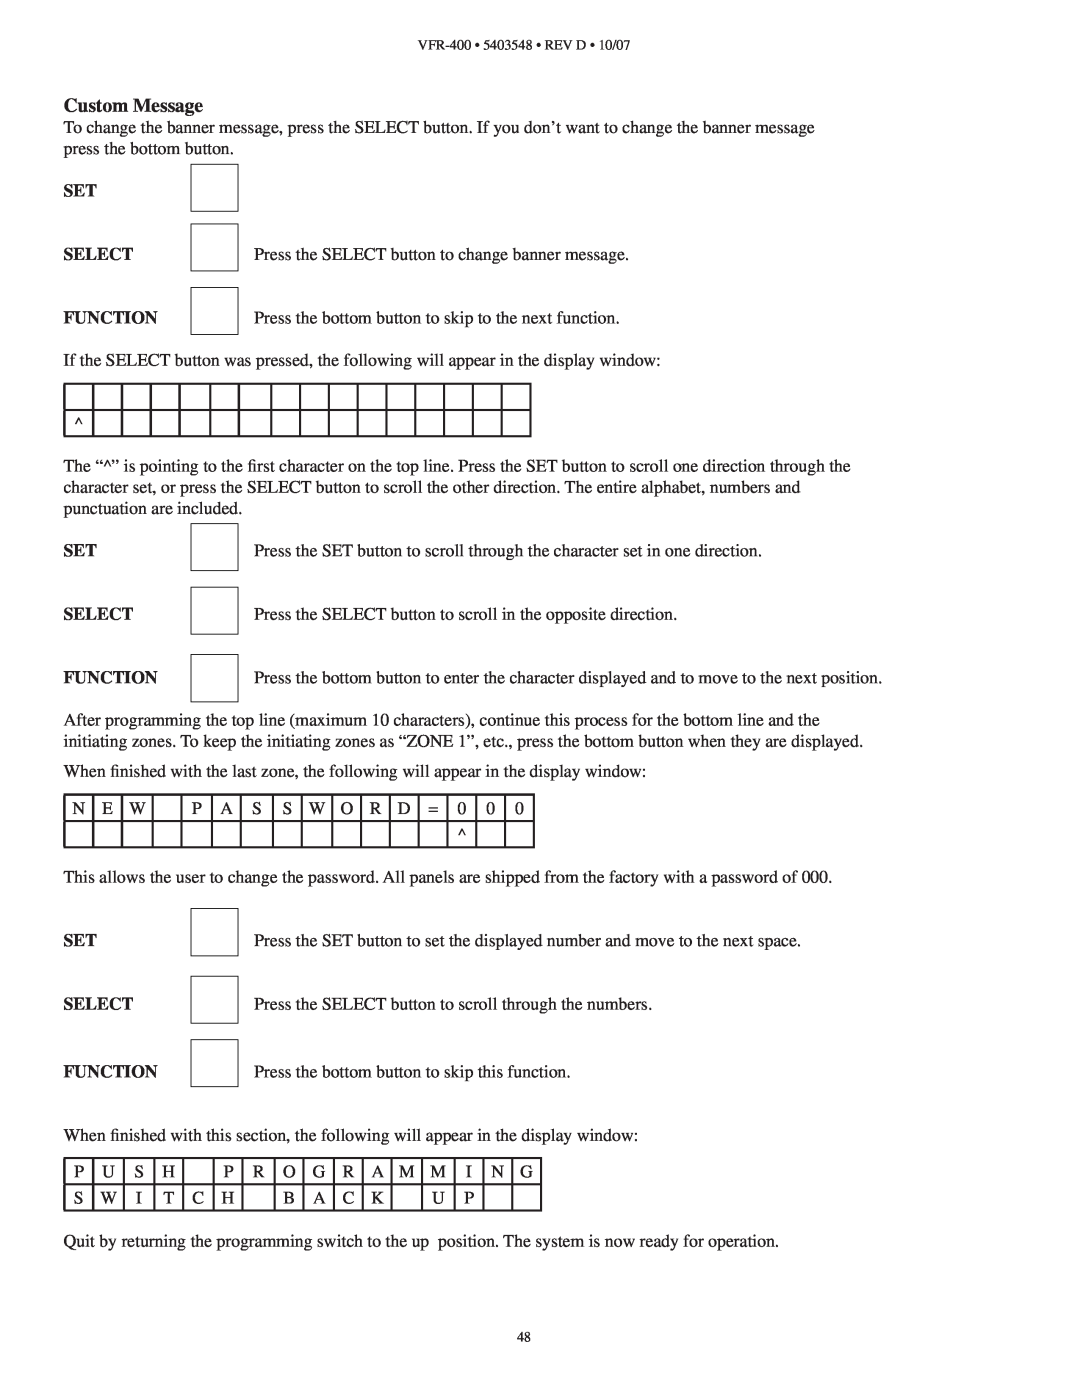 Viking VFR-400 instruction manual Custom Message, Set Select Function 